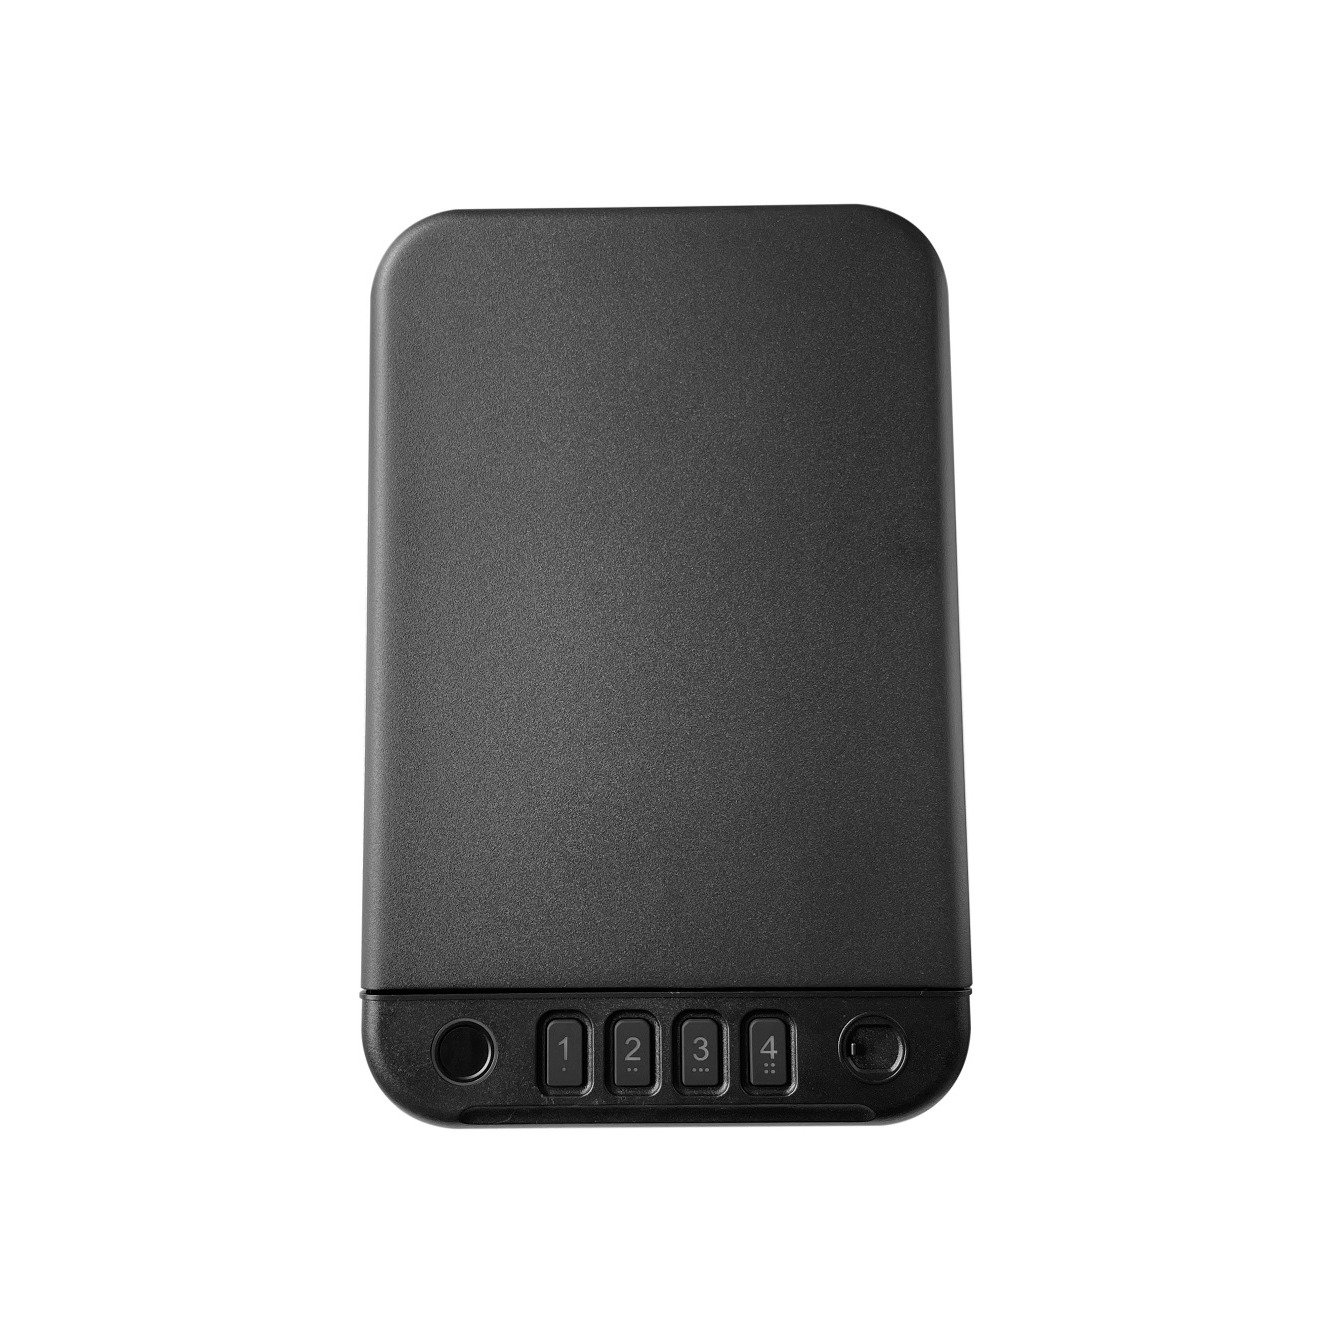 Cofre Smart Safewell - Mod Ps0101f C/ Biometria - 1